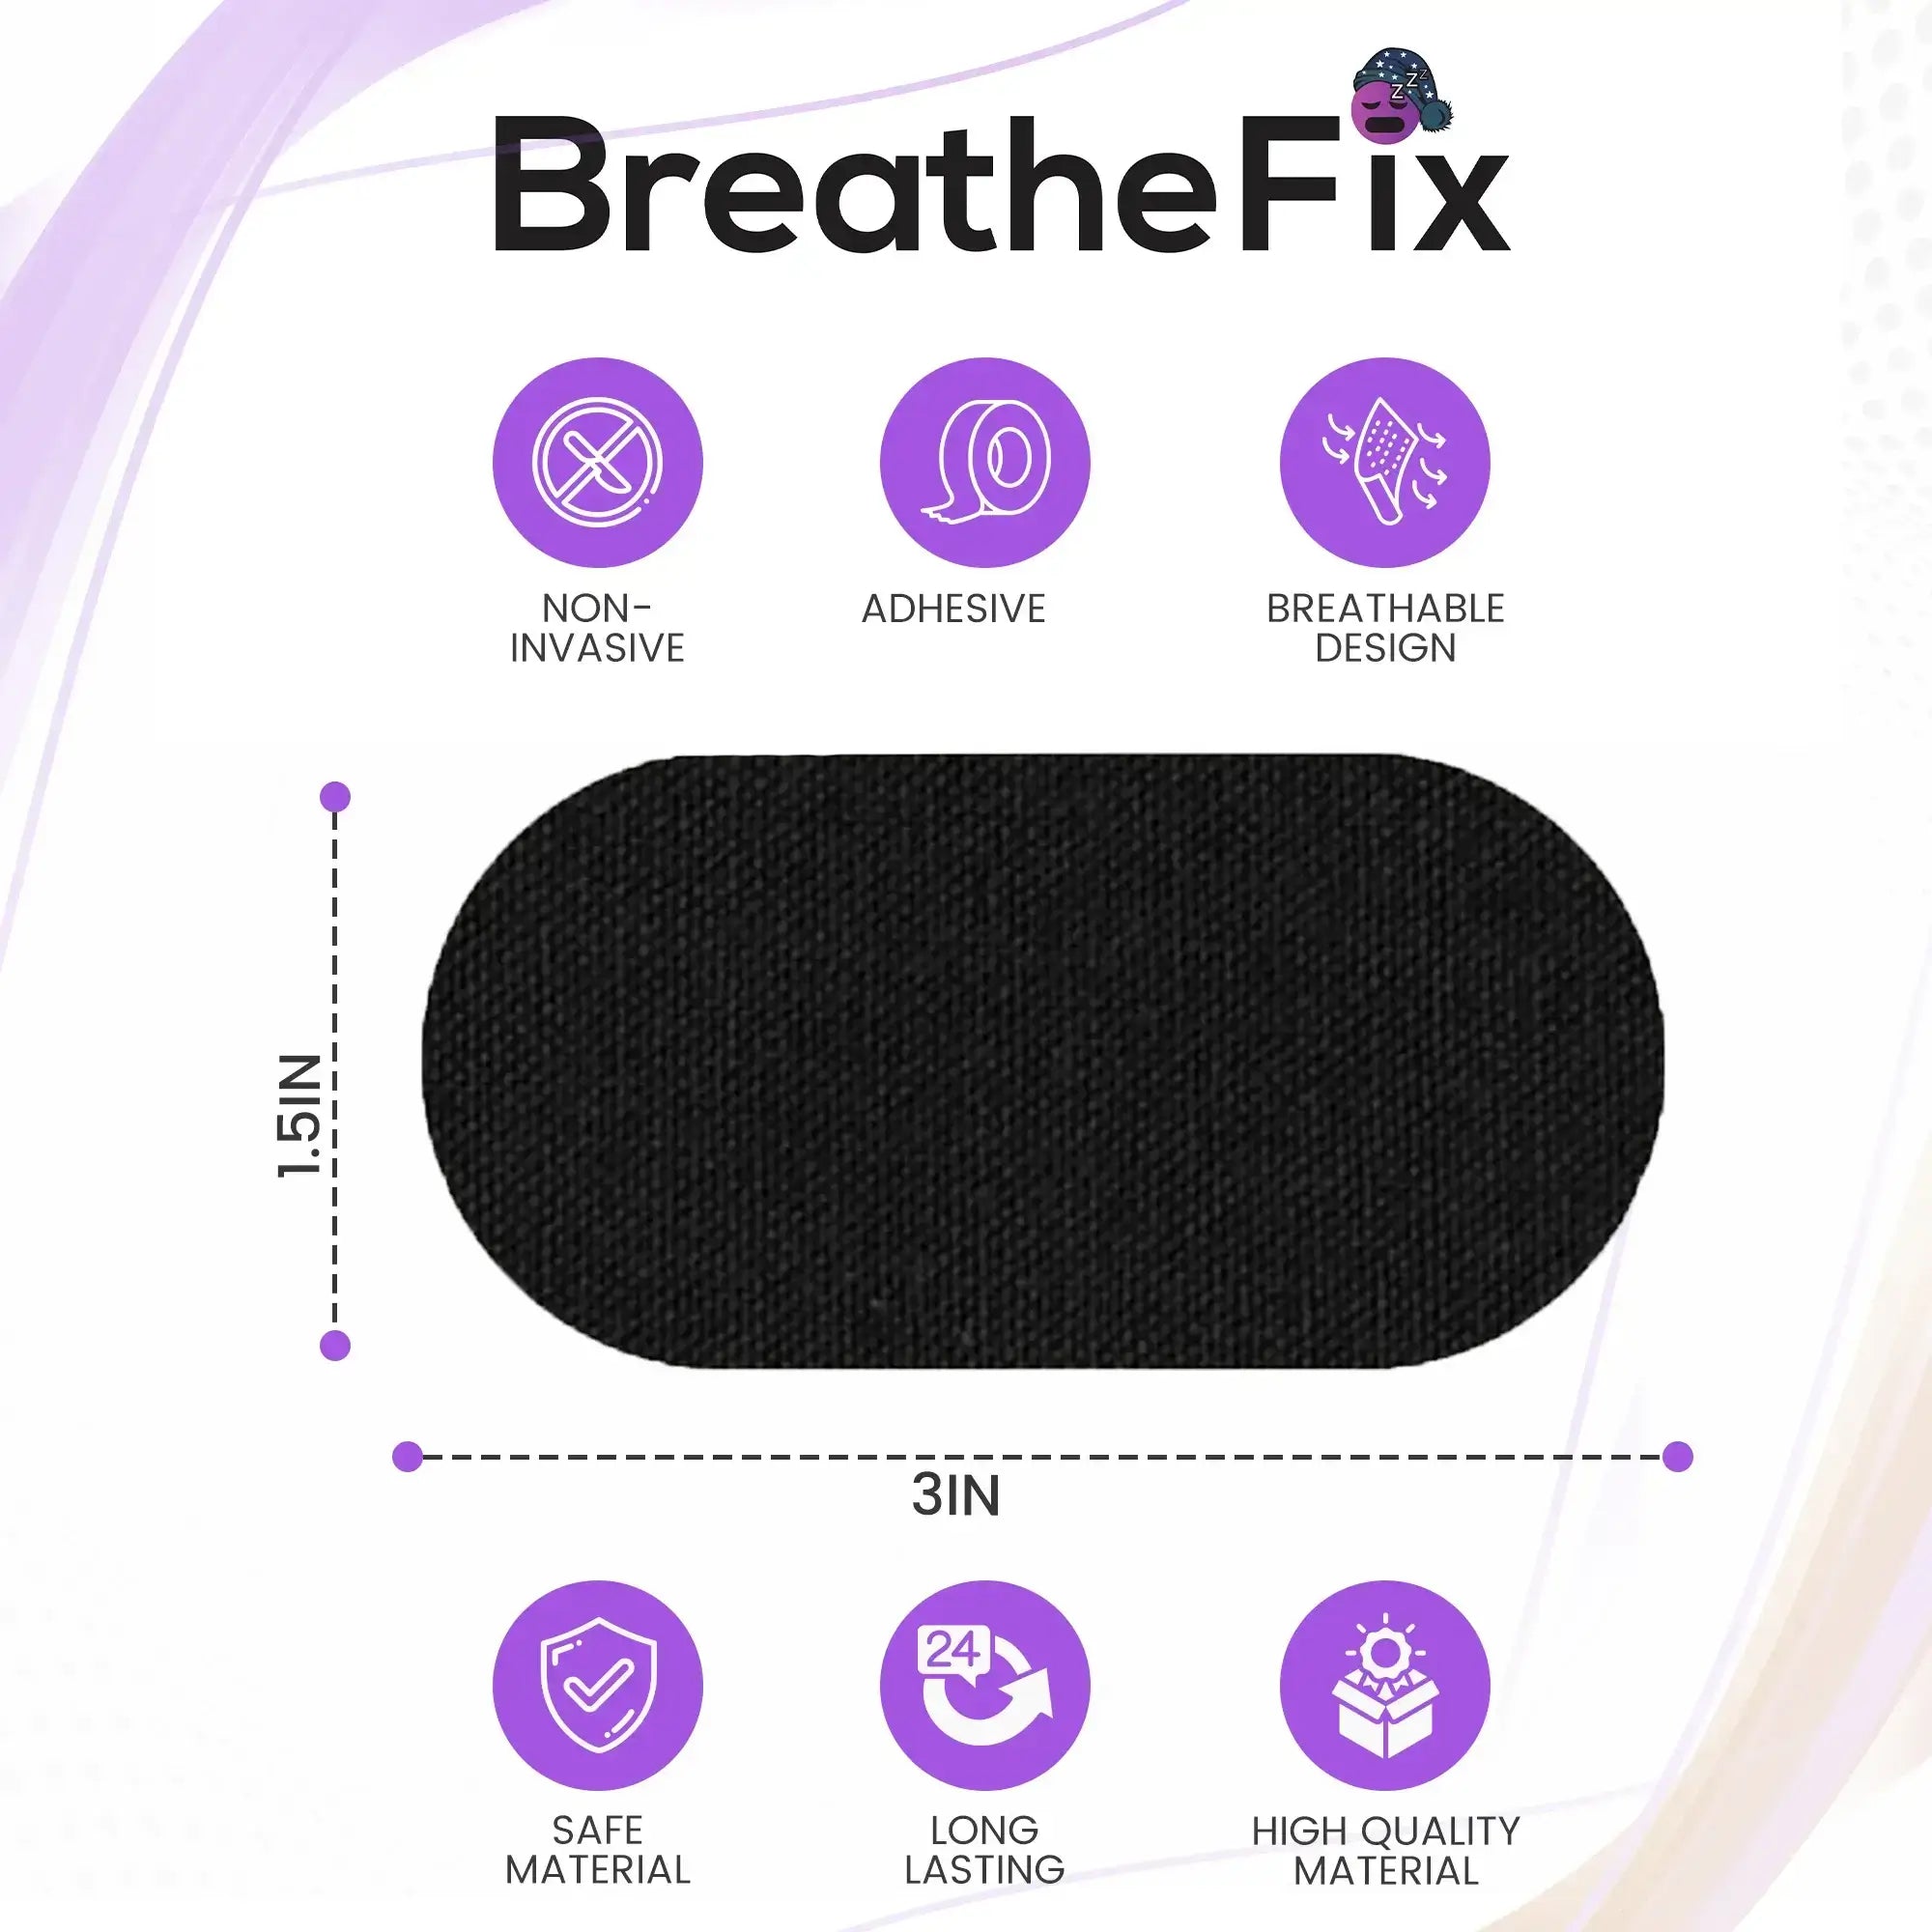 Mouth Tape - BreatheFix